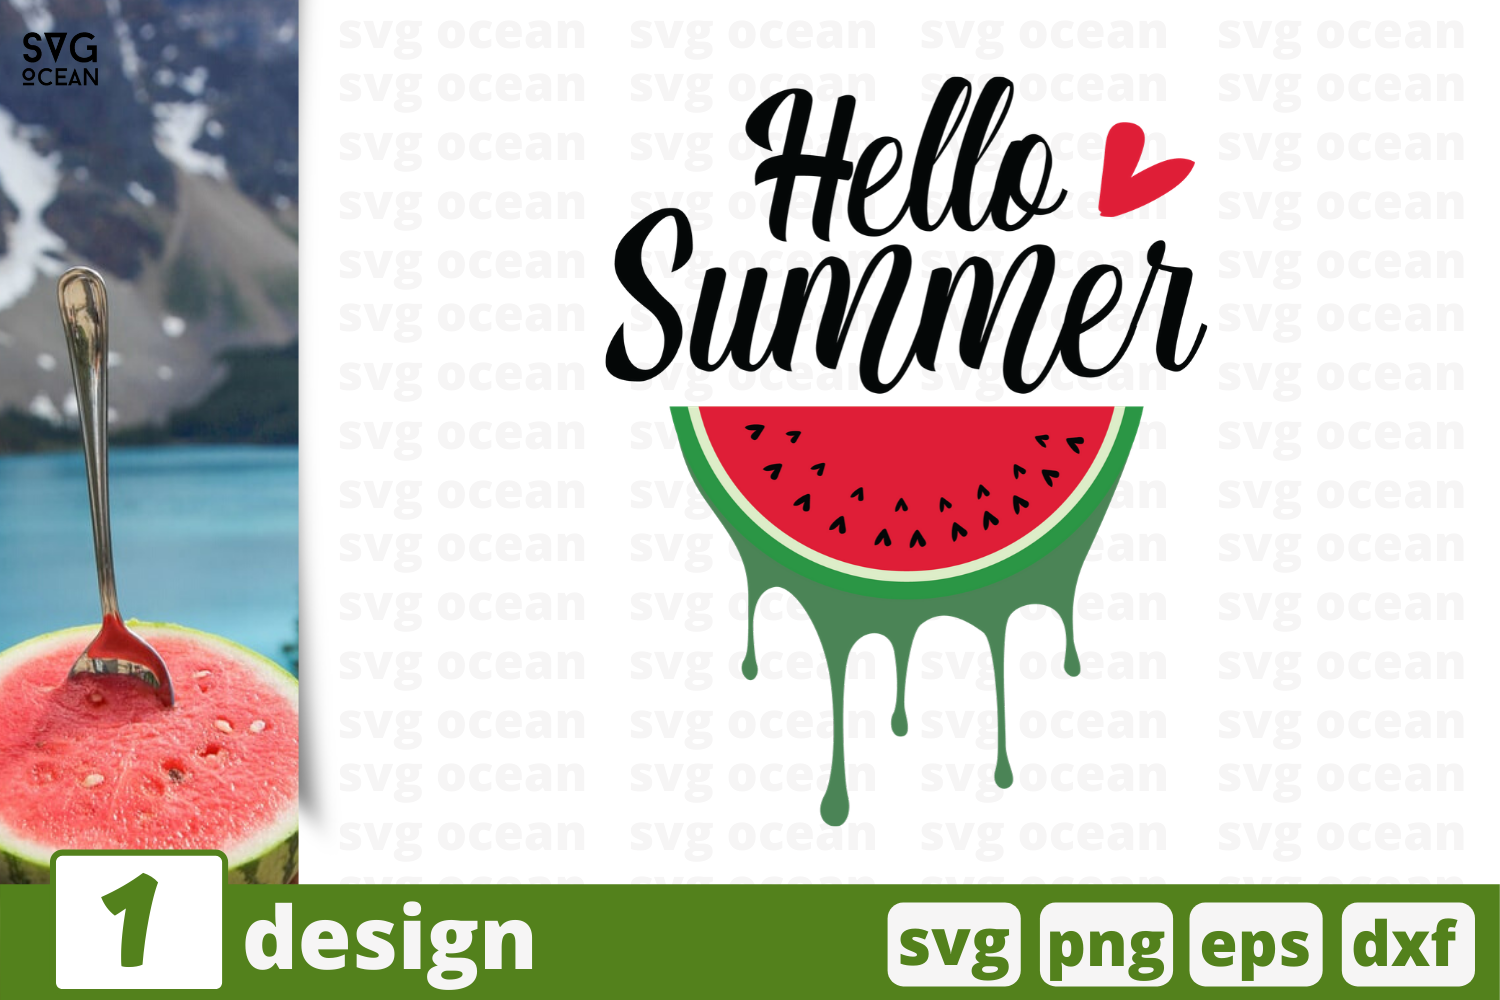 1 Hello Summer Svg Bundle Watermelon Cricut Svg By Svgocean Thehungryjpeg Com